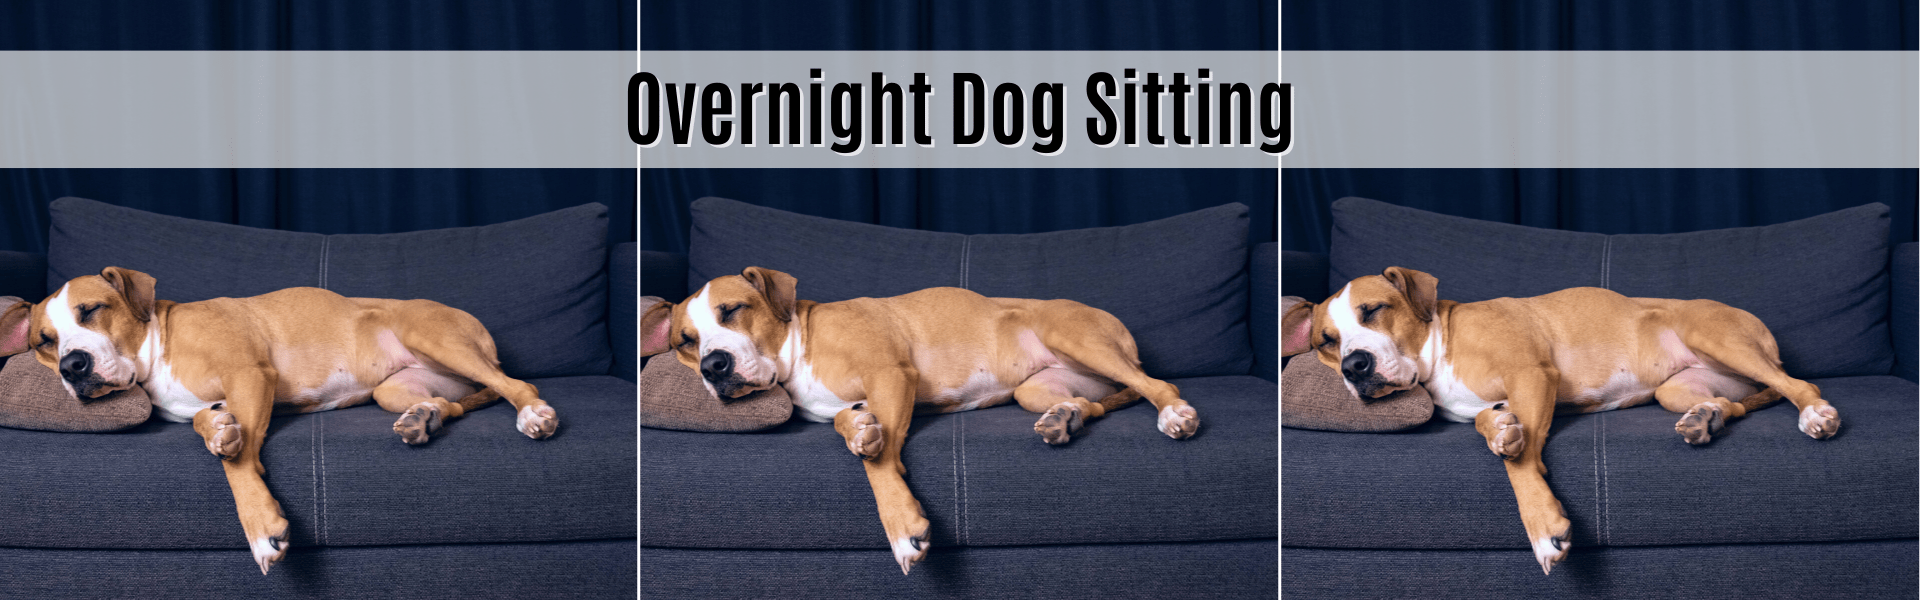 overnight dog sitting